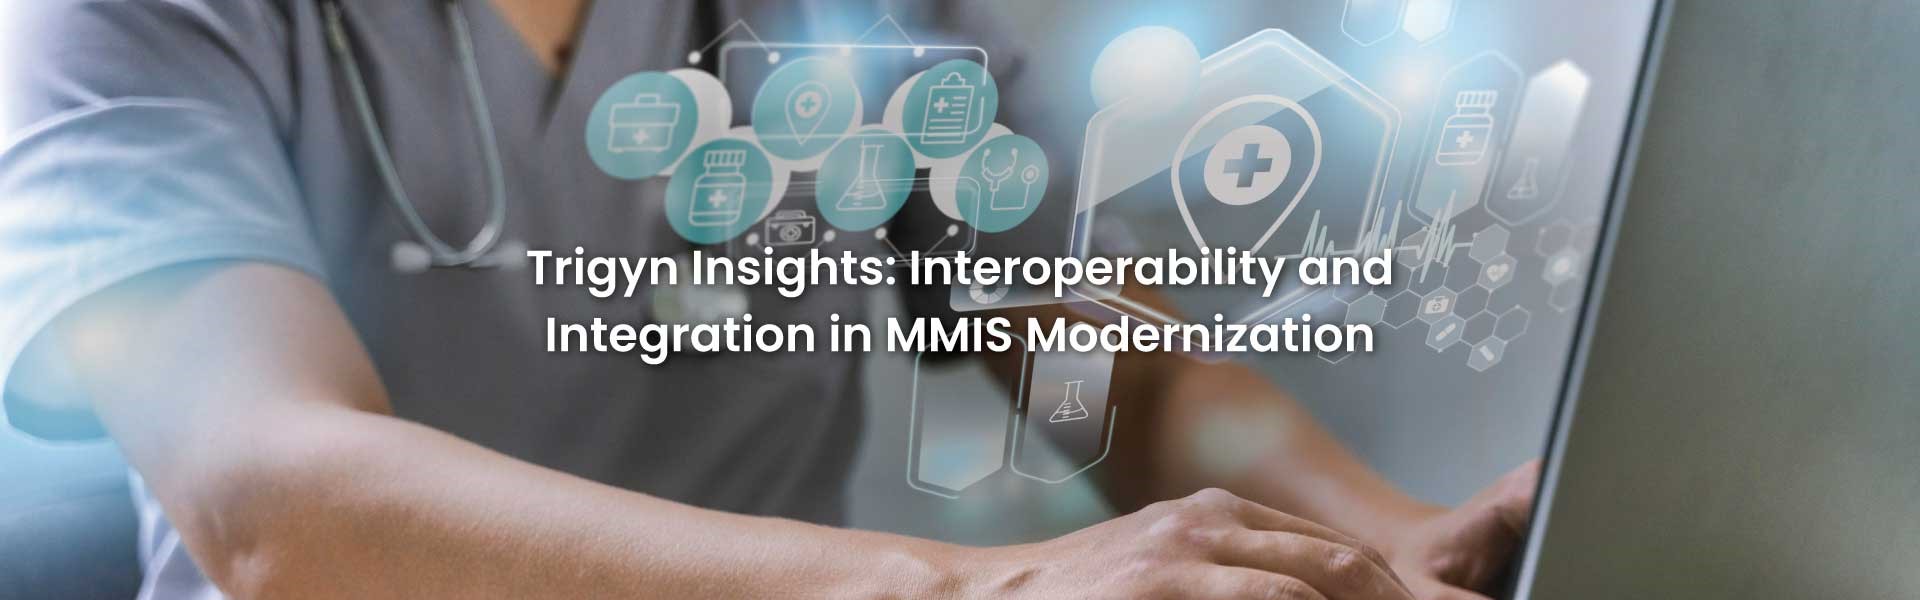 Systems Integration in MMIS Modernization